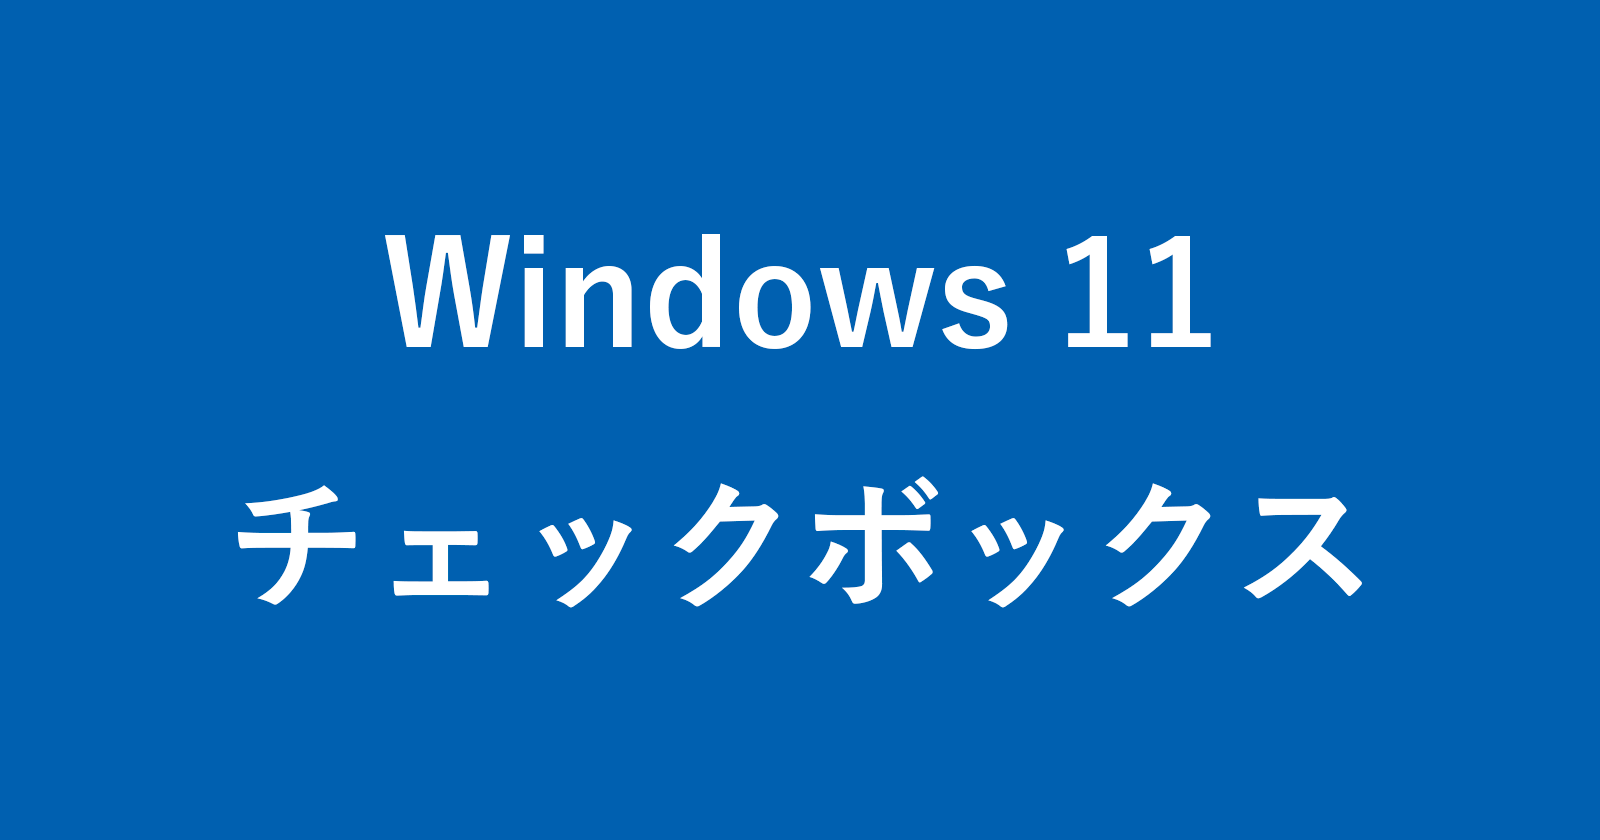 windows 11 check boxes